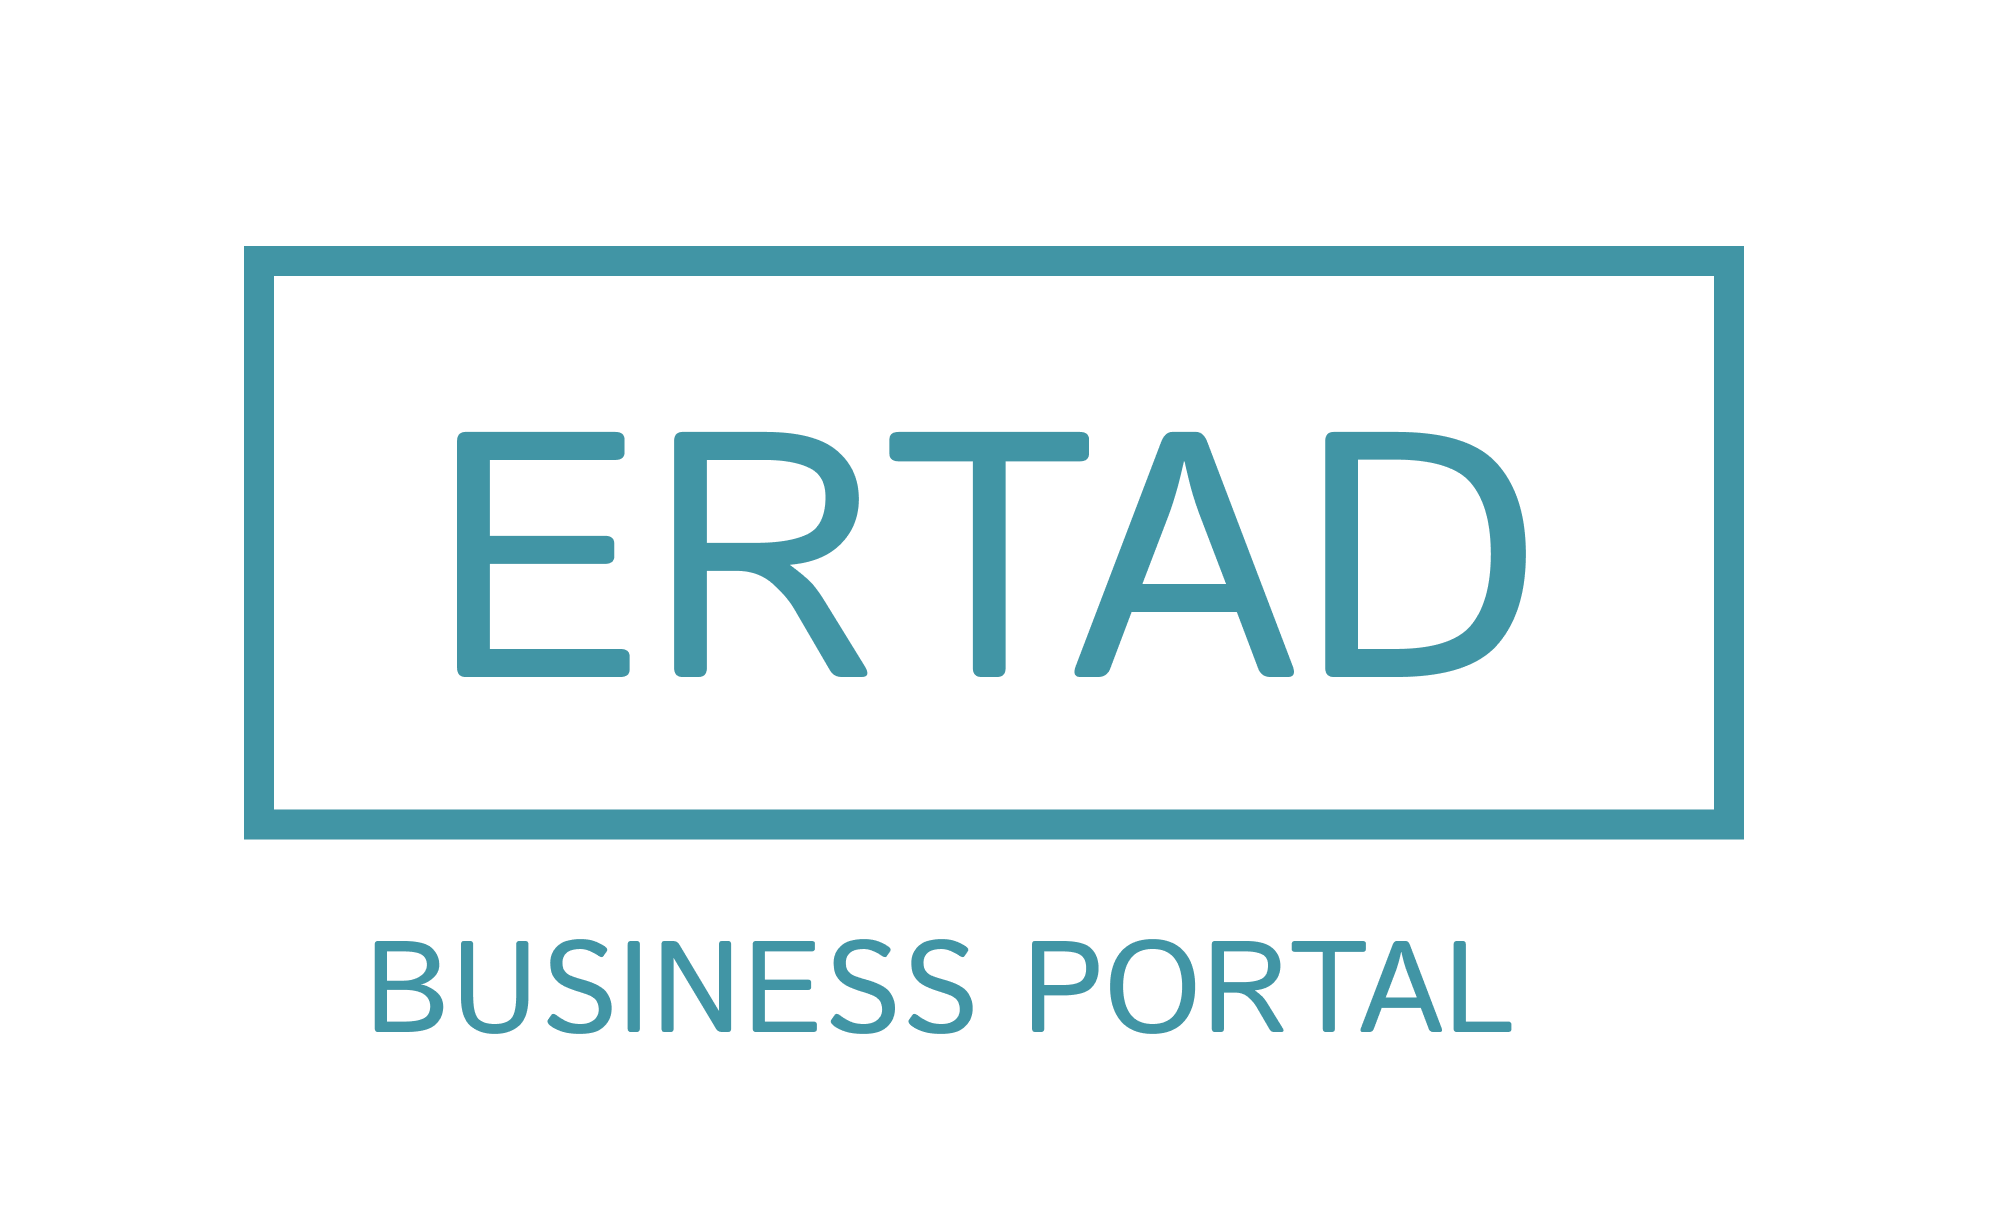 Business Portal Ertad